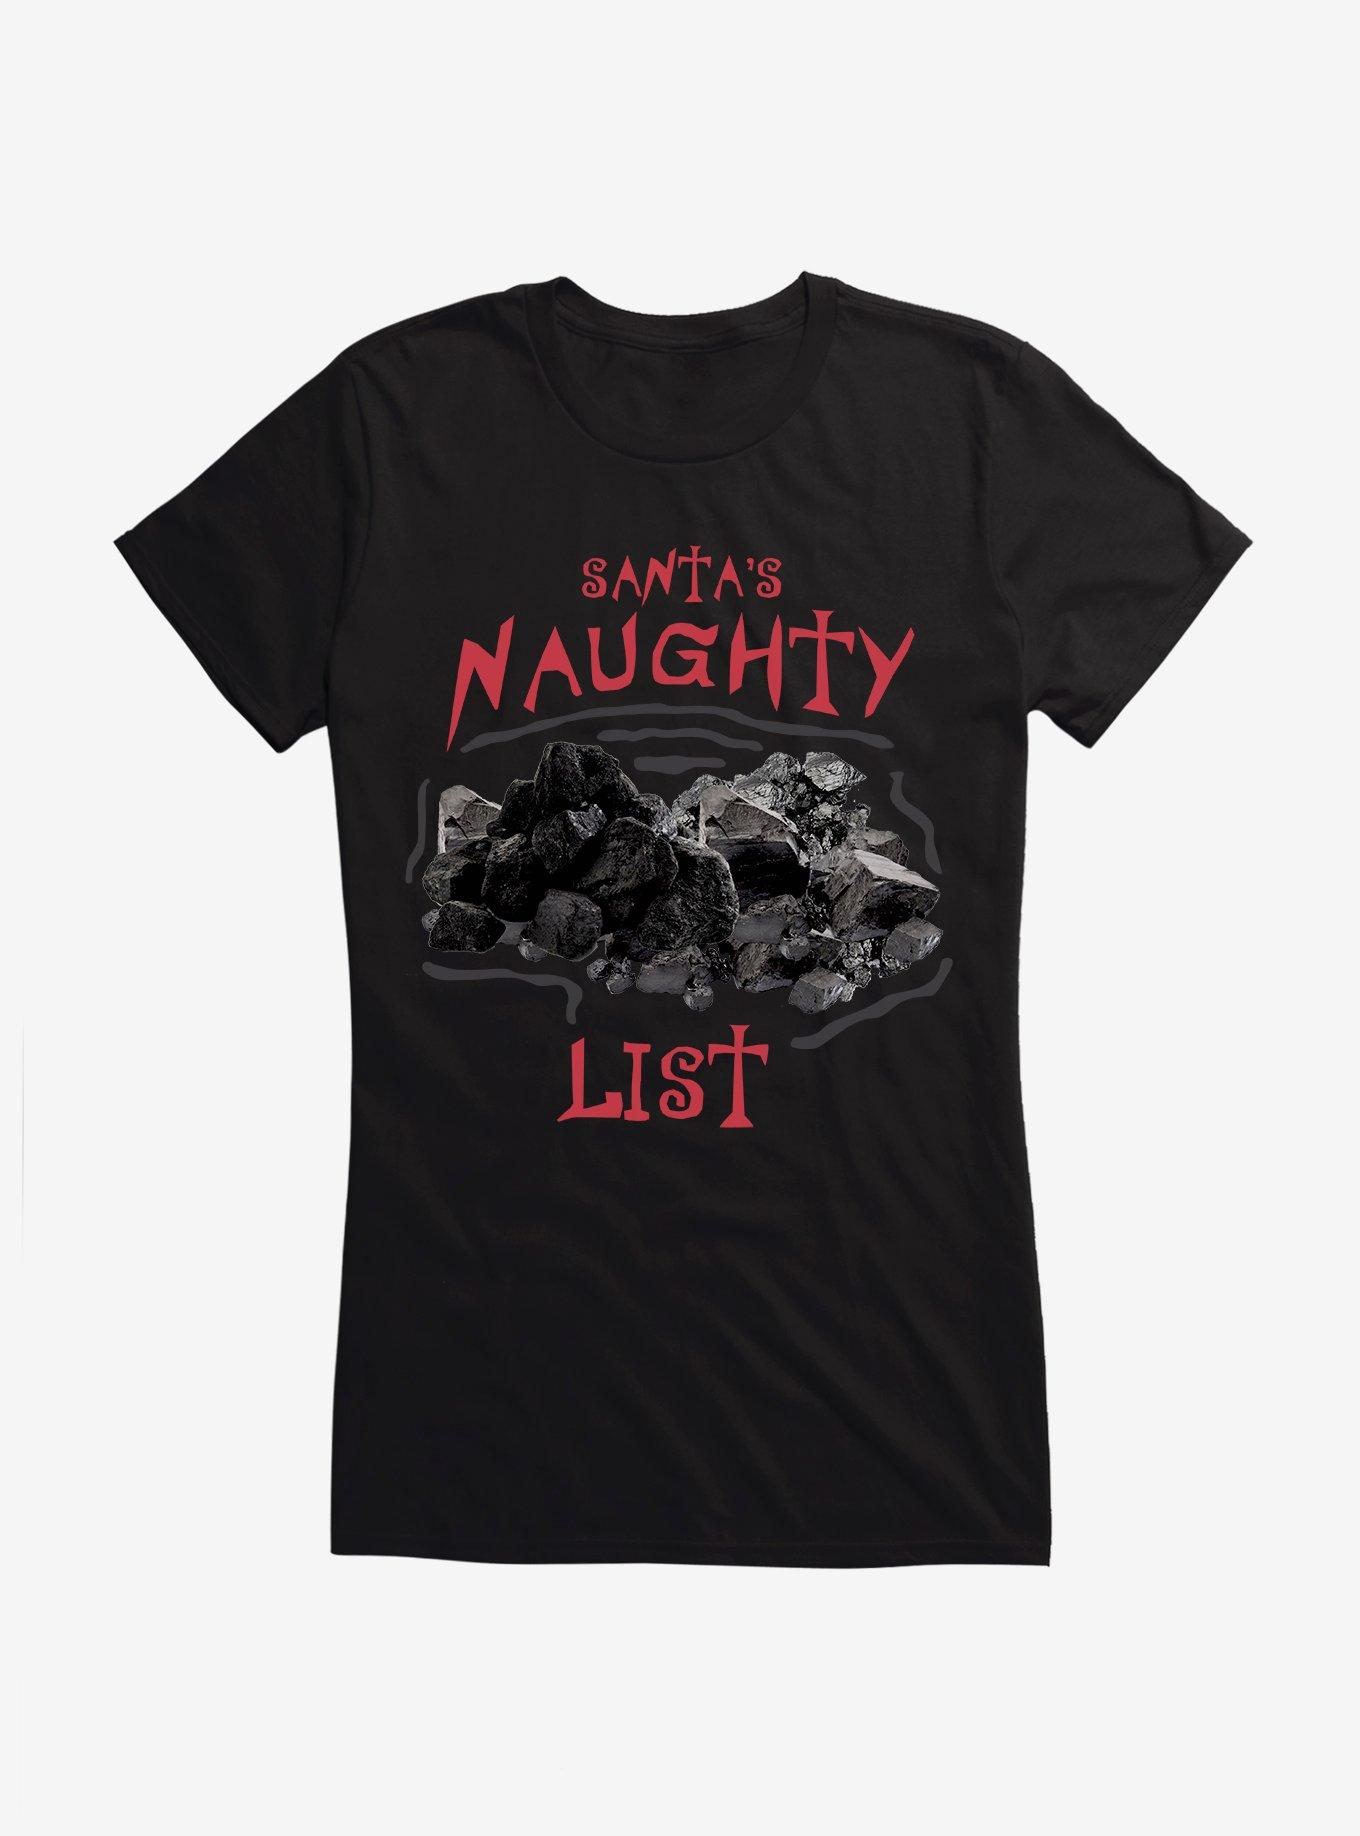 Hot Topic Santa's Naughty List Girls T-Shirt